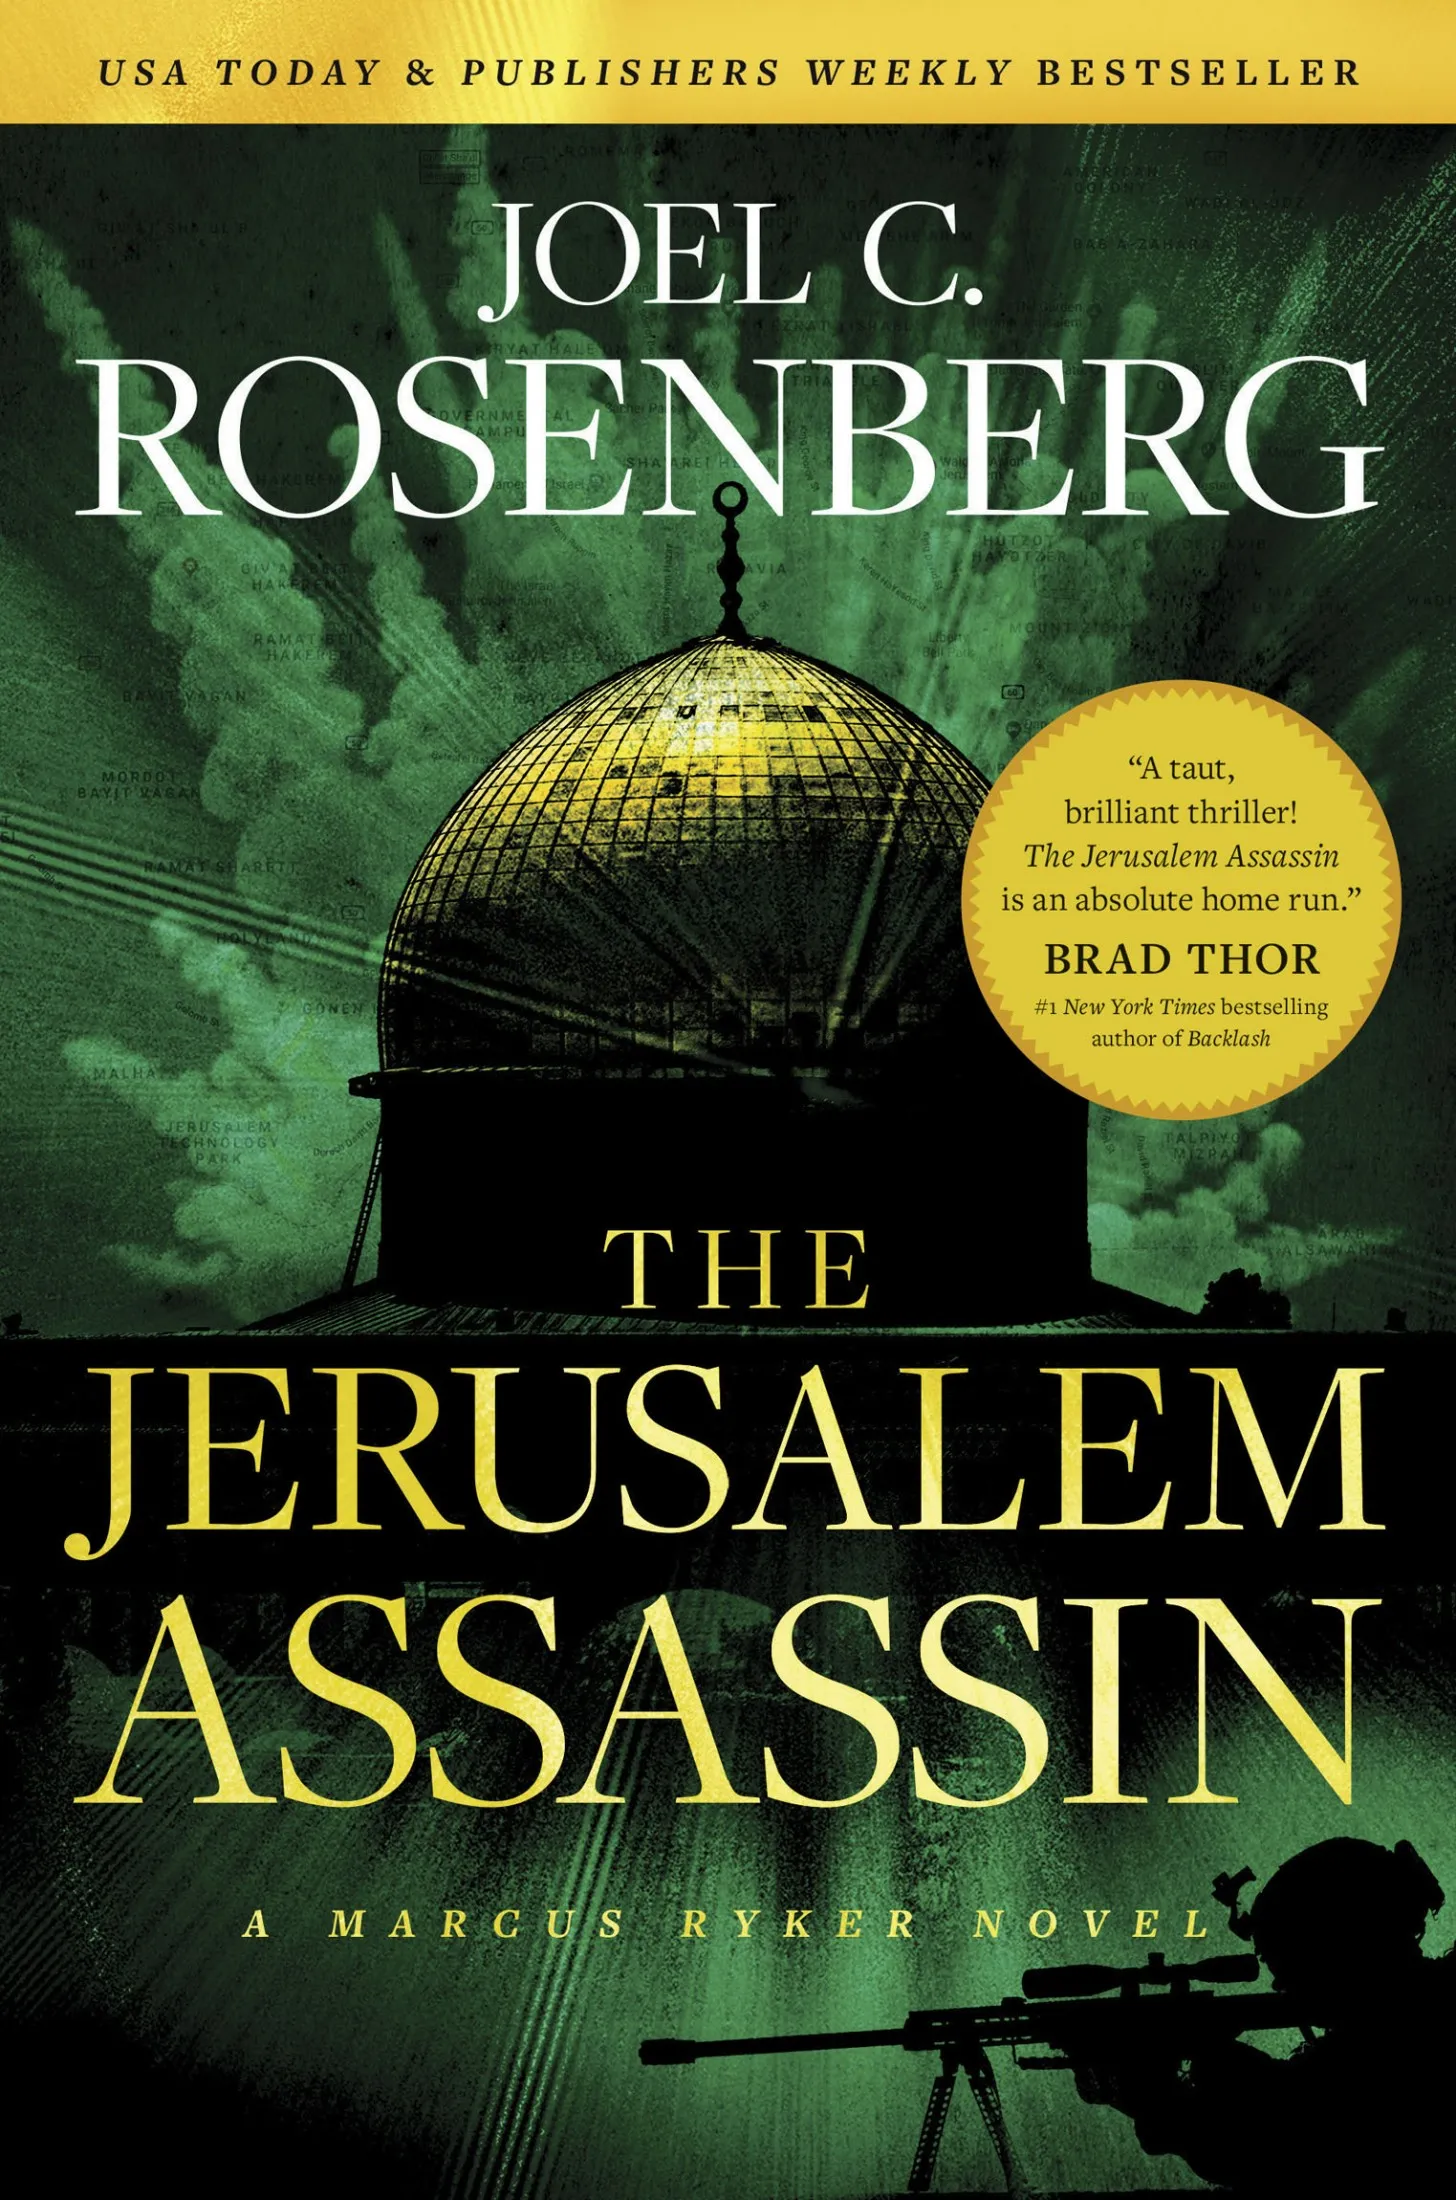 The Jerusalem Assassin (Marcus Ryker #3)